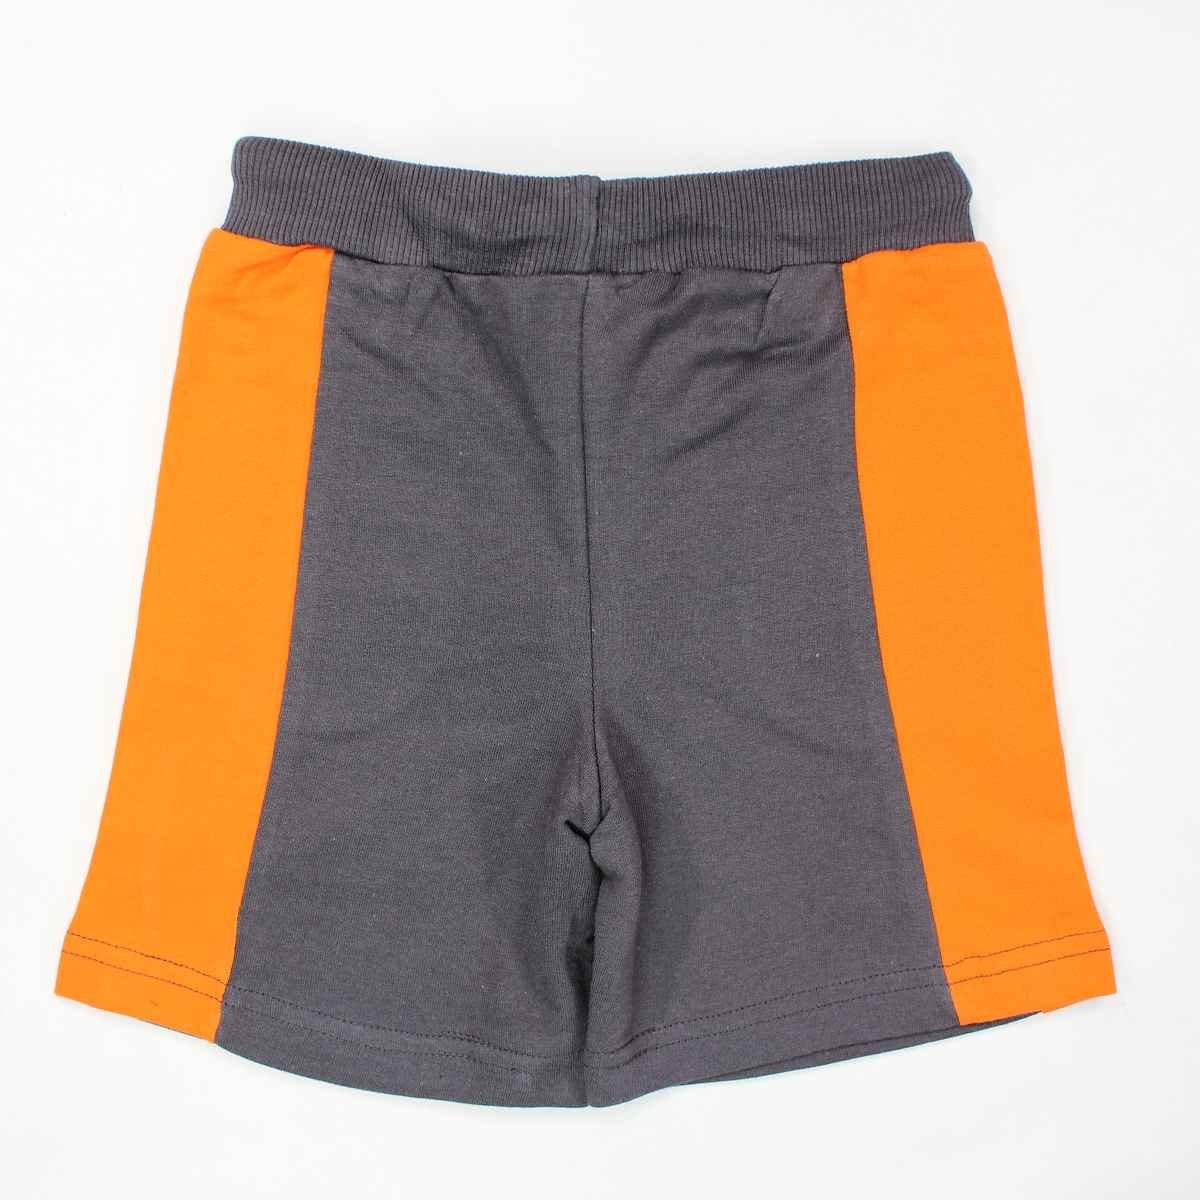 Naruto Shorts Naruto Shippuden Kinder 100% Shorts Jungen Gr. 152 bis Baumwolle 110 Grau